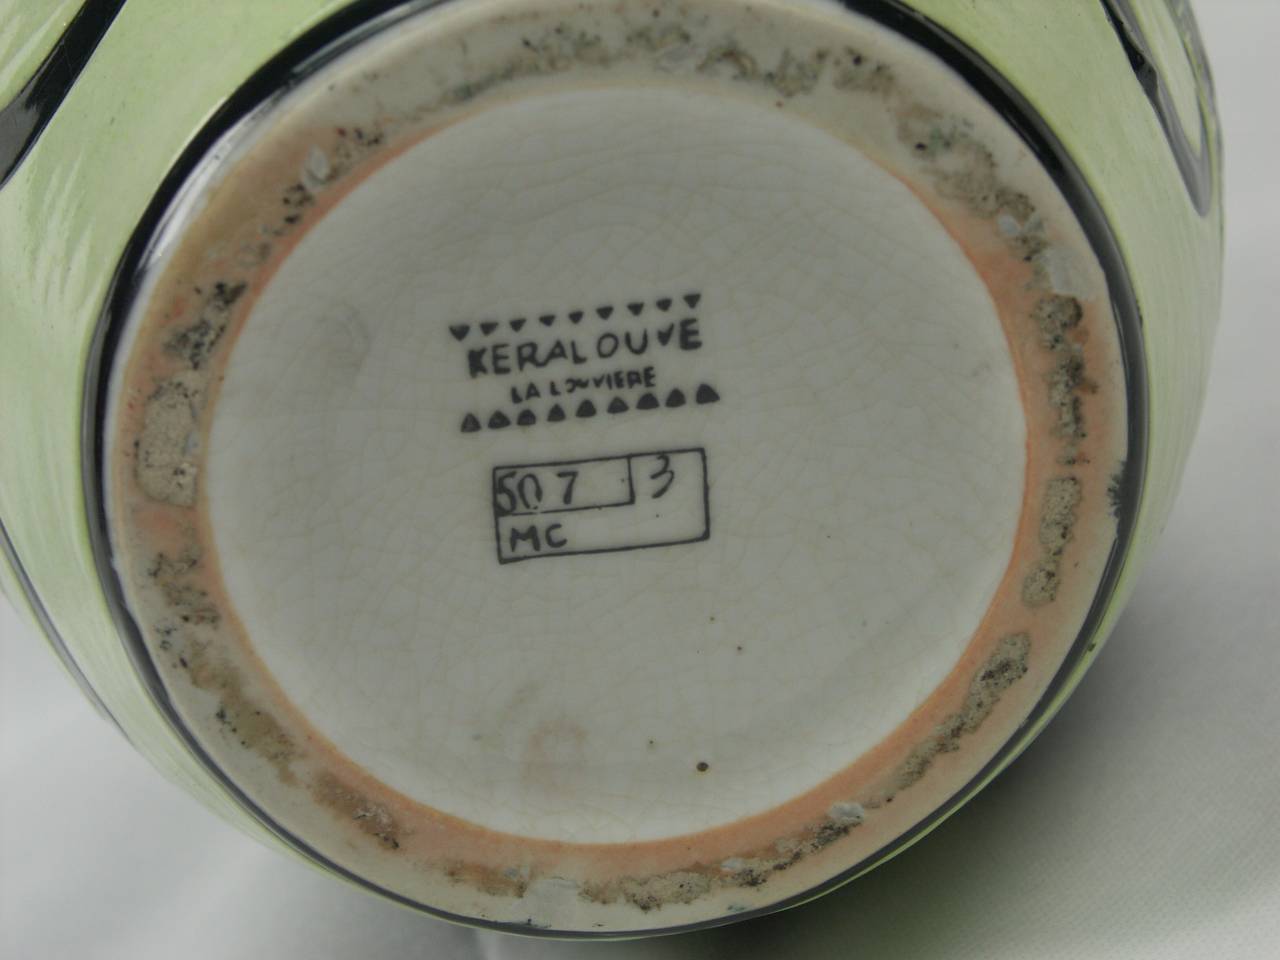 Late 20th Century Ceramic Vase Keralouve (La Louviére)